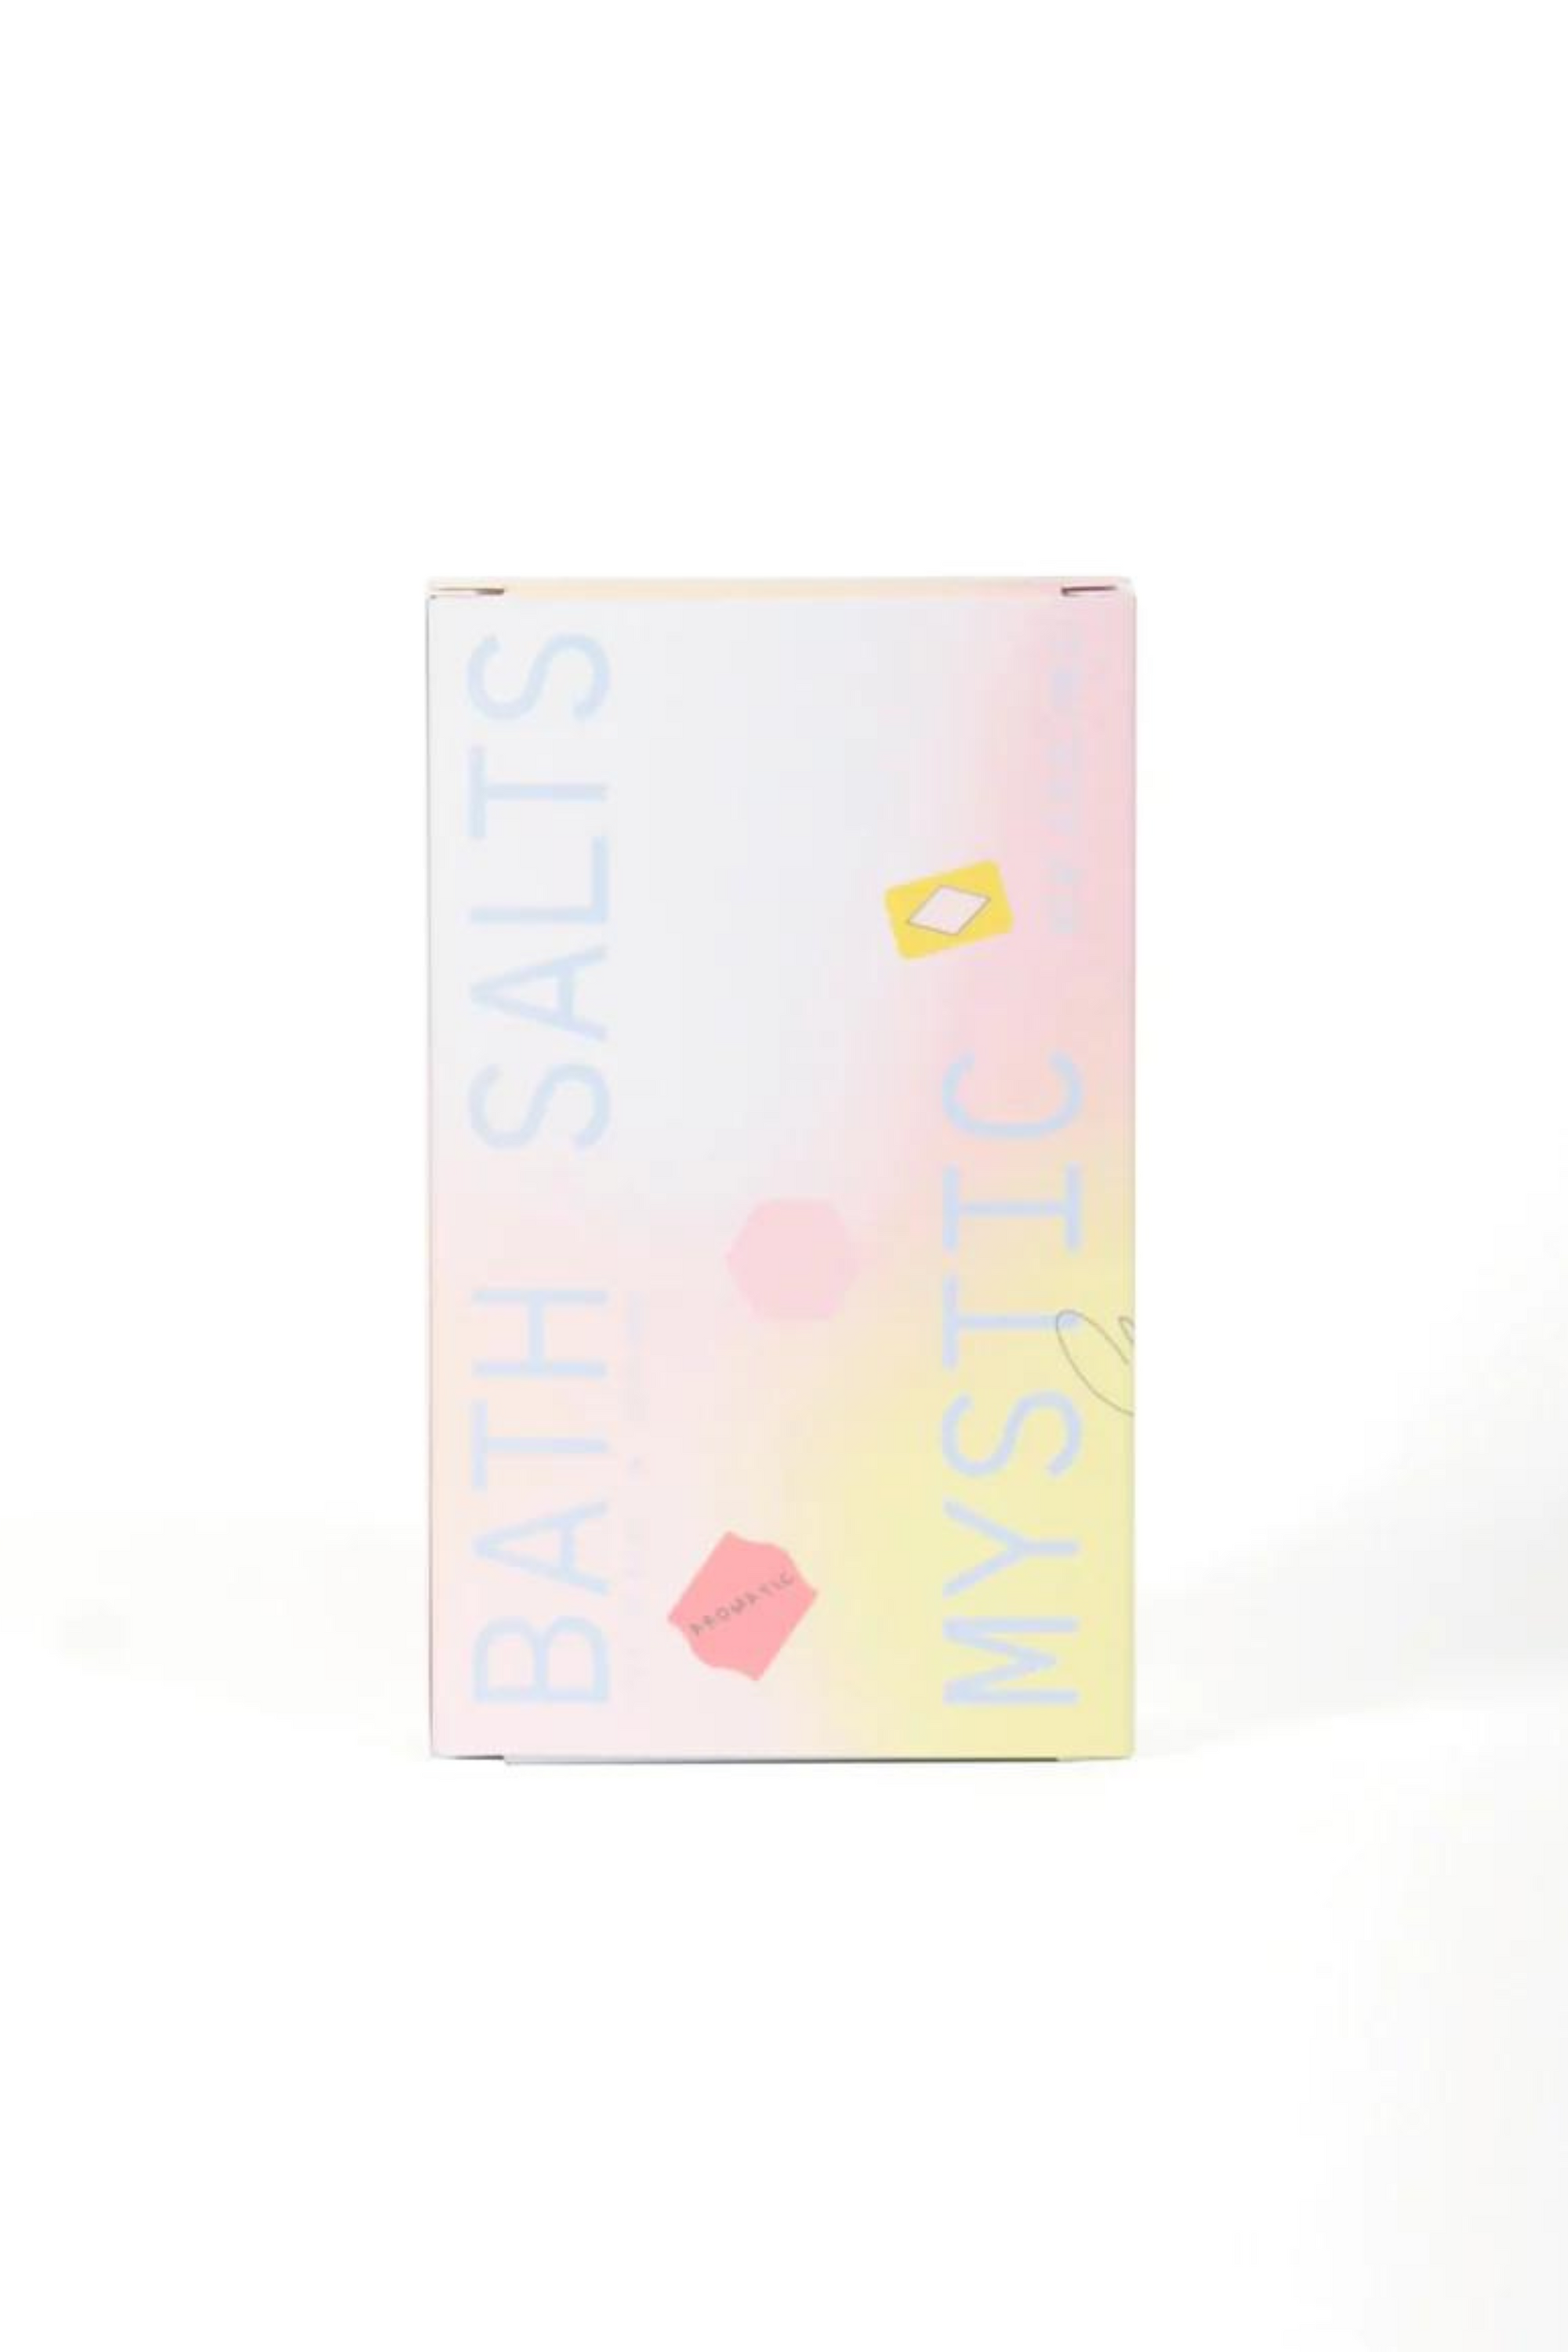 Mystic Bath Salts